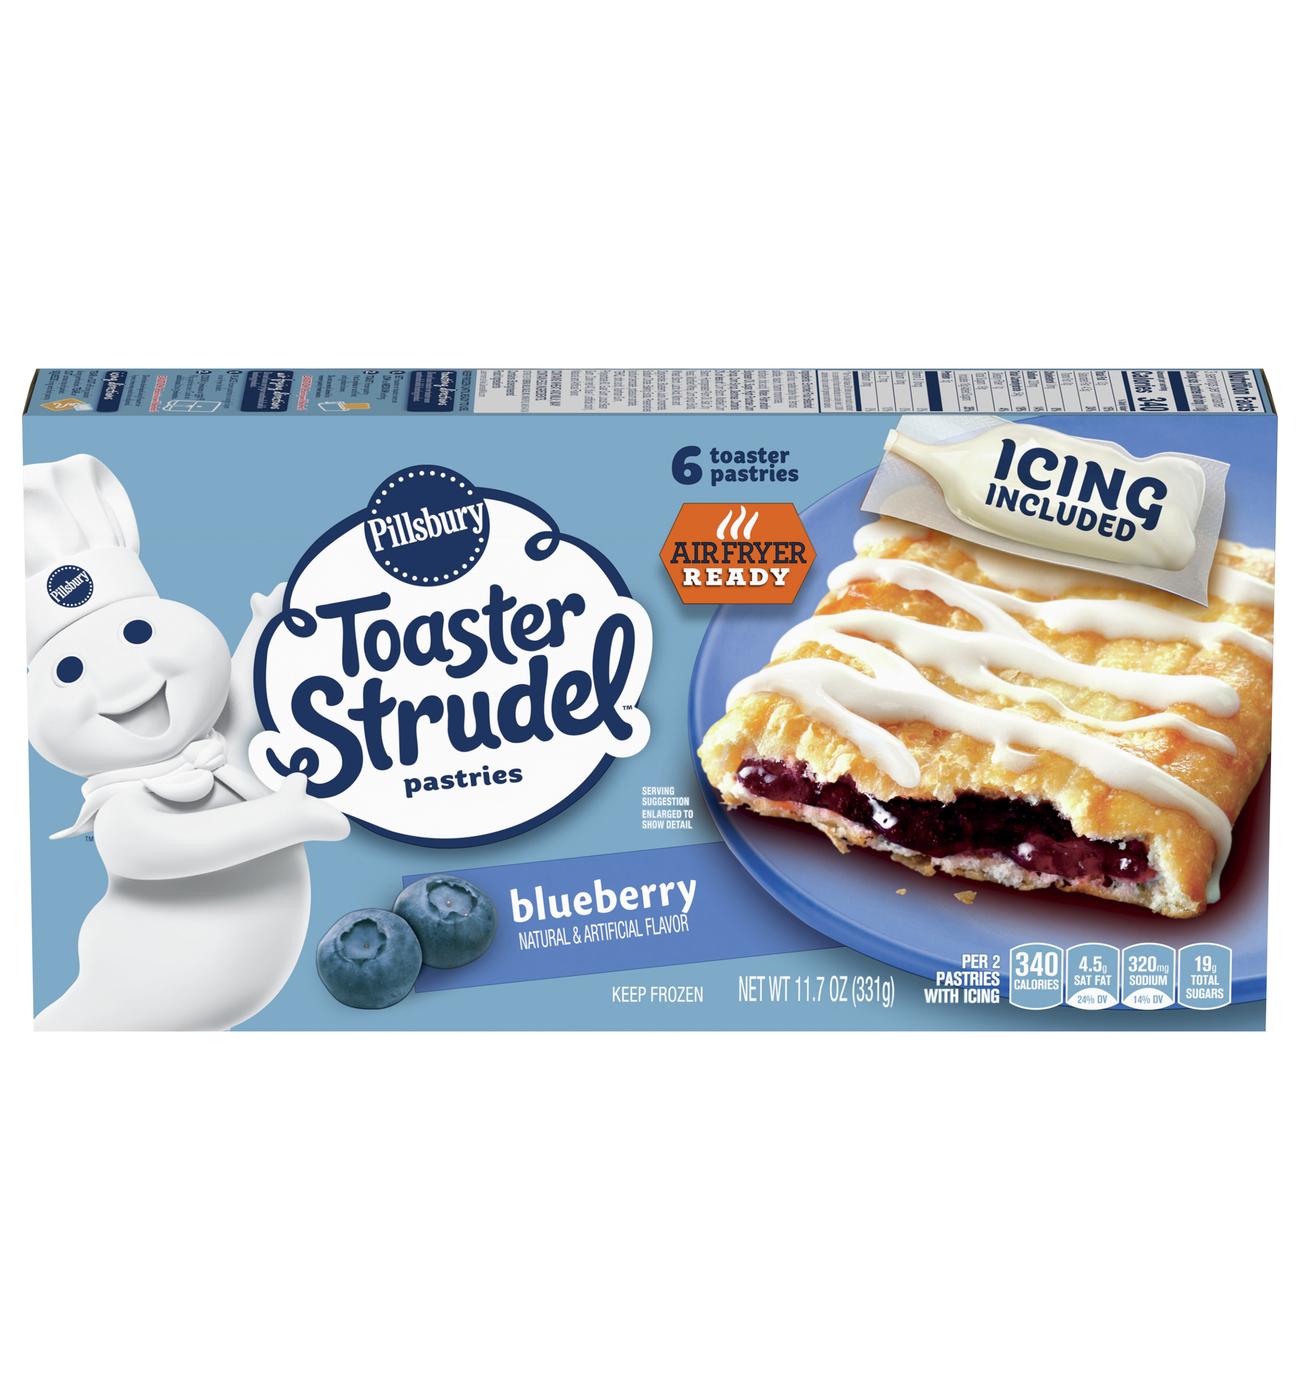 Pillsbury Toaster Strudel Frozen Pastries - Blueberry; image 1 of 2